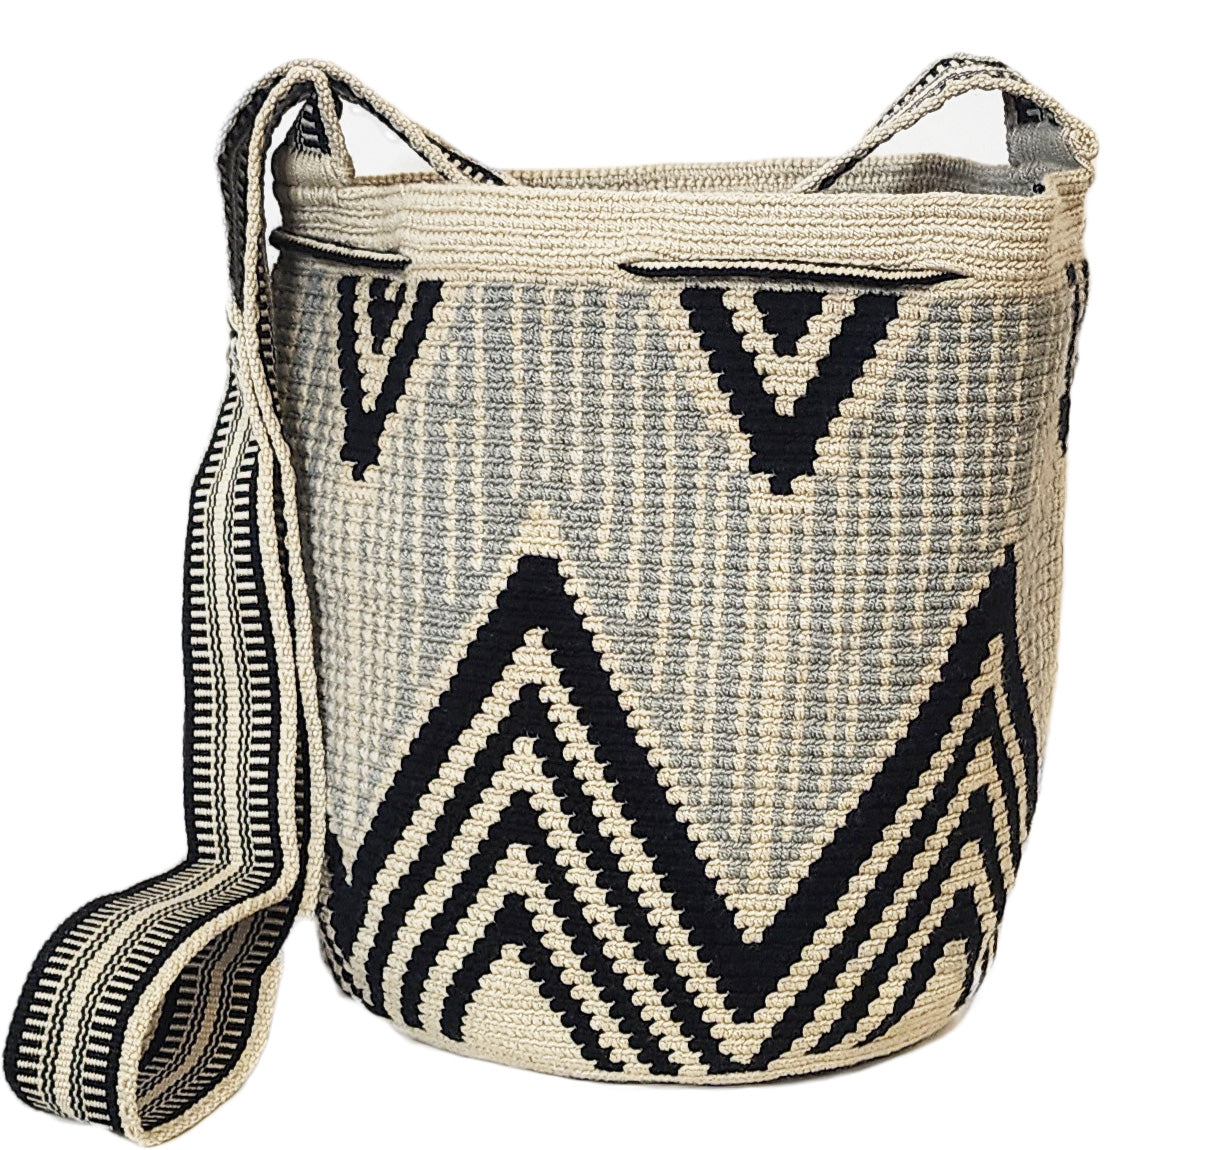 Egypt Handmade Wayuu Mochila bag - Wuitusu